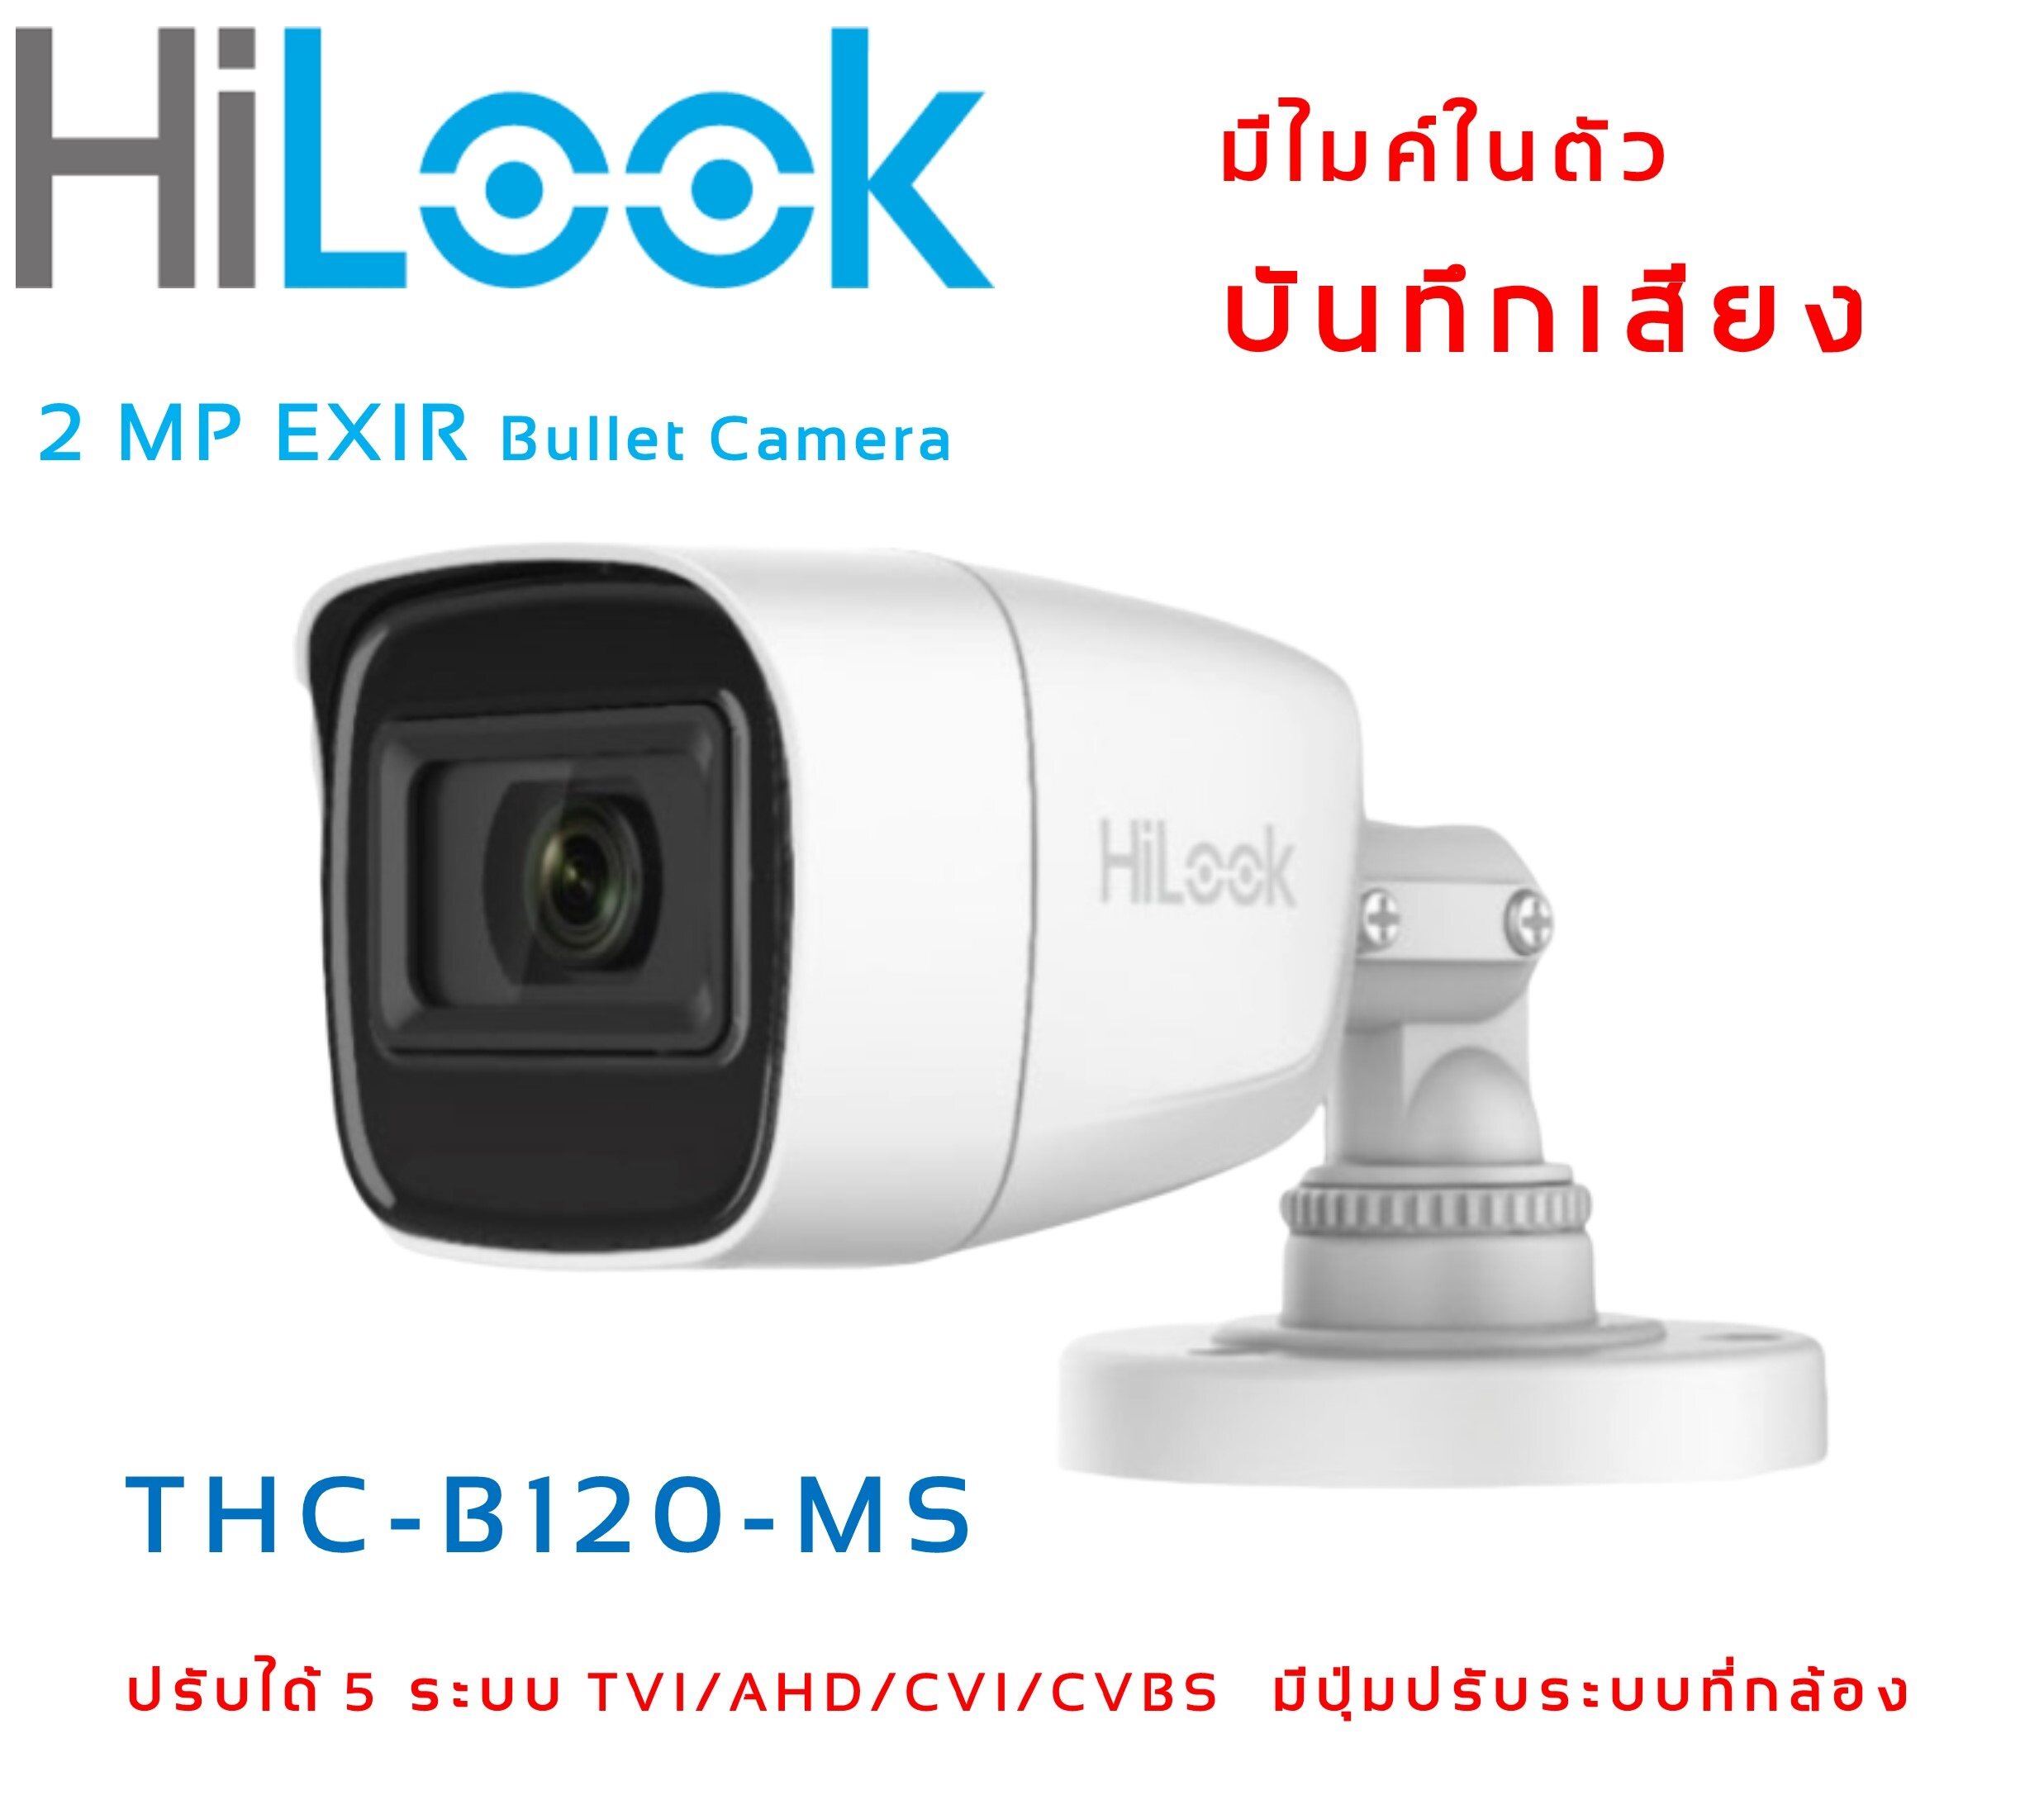 HILOOK กล้องไมค์ HLKB120MS กล้องวงจรปิด 1080P มีไมค์ในตัว Built in microphone